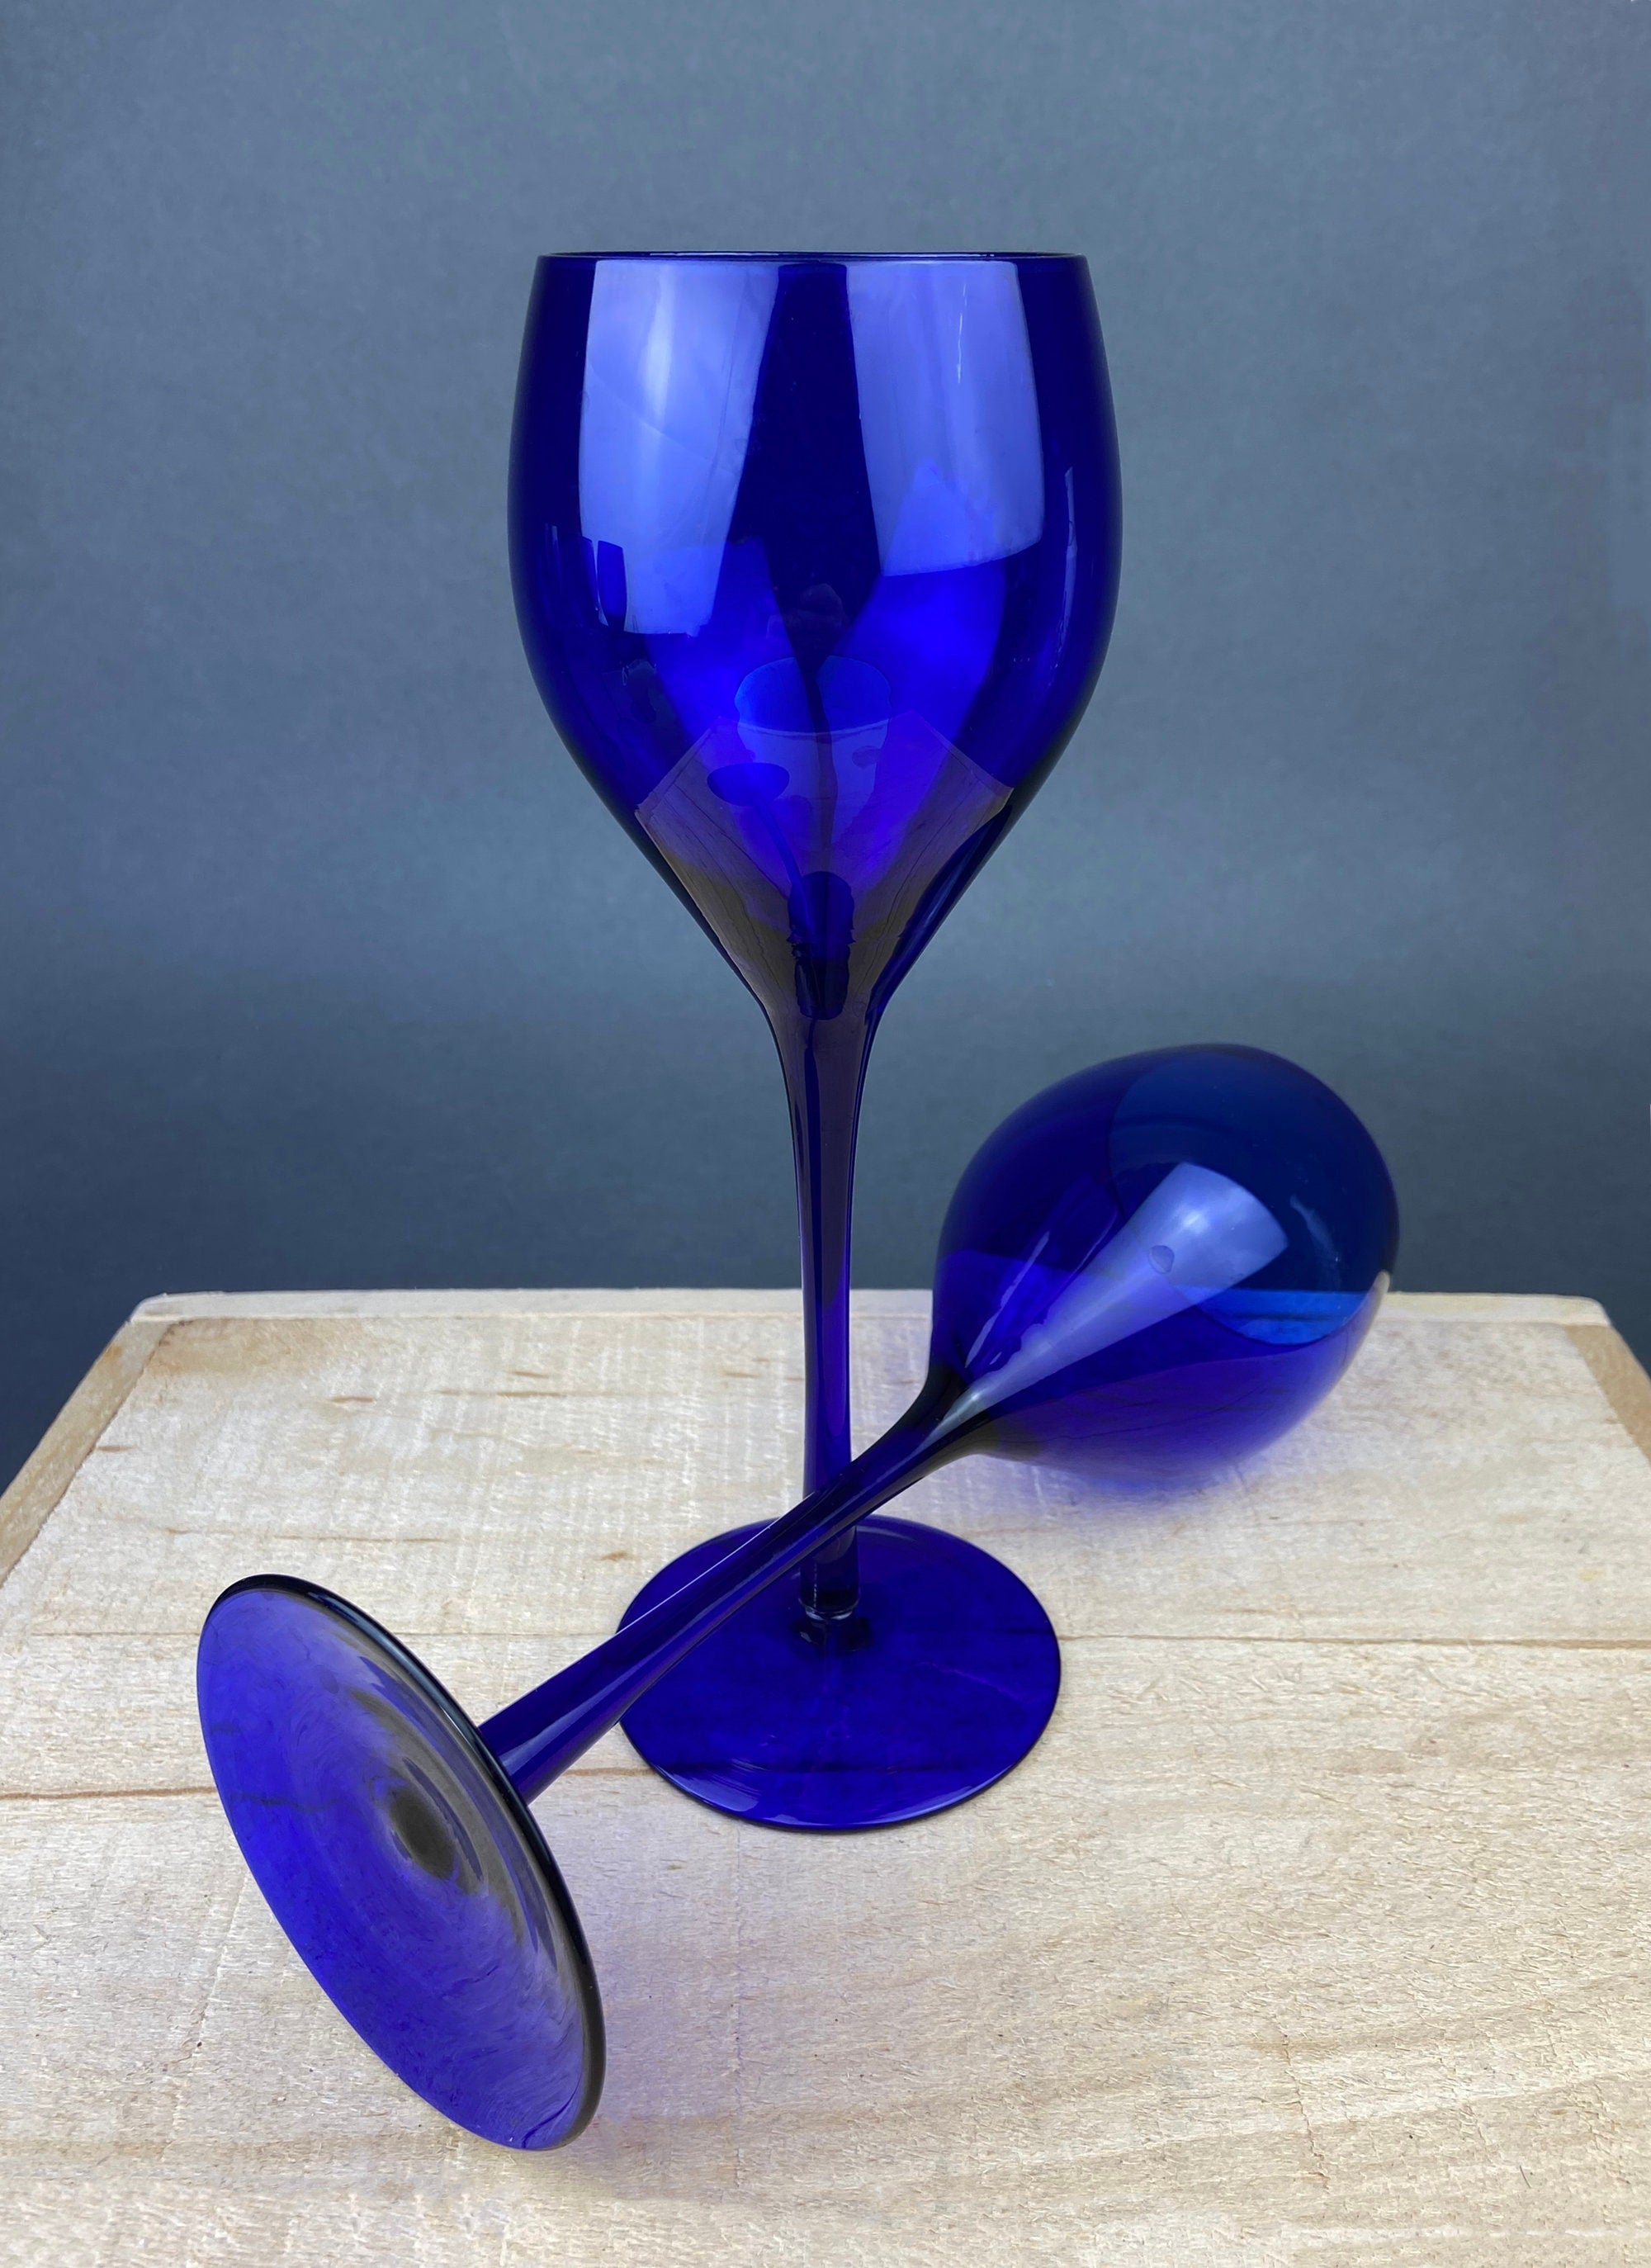 Matching Set: Beautiful Cobalt Blue Wine Glasses - household items